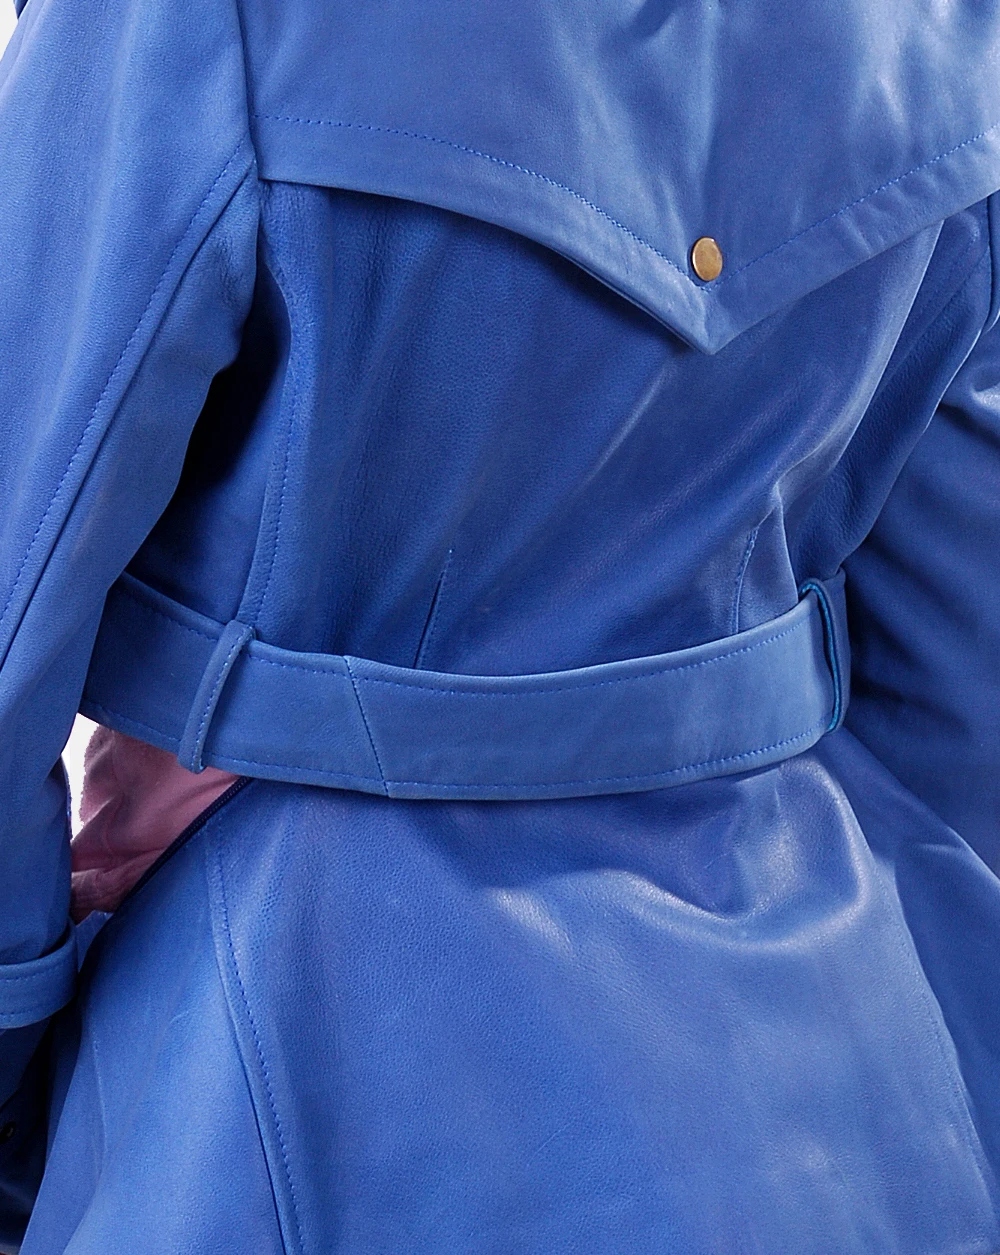 Blue Womens Leather Jacket